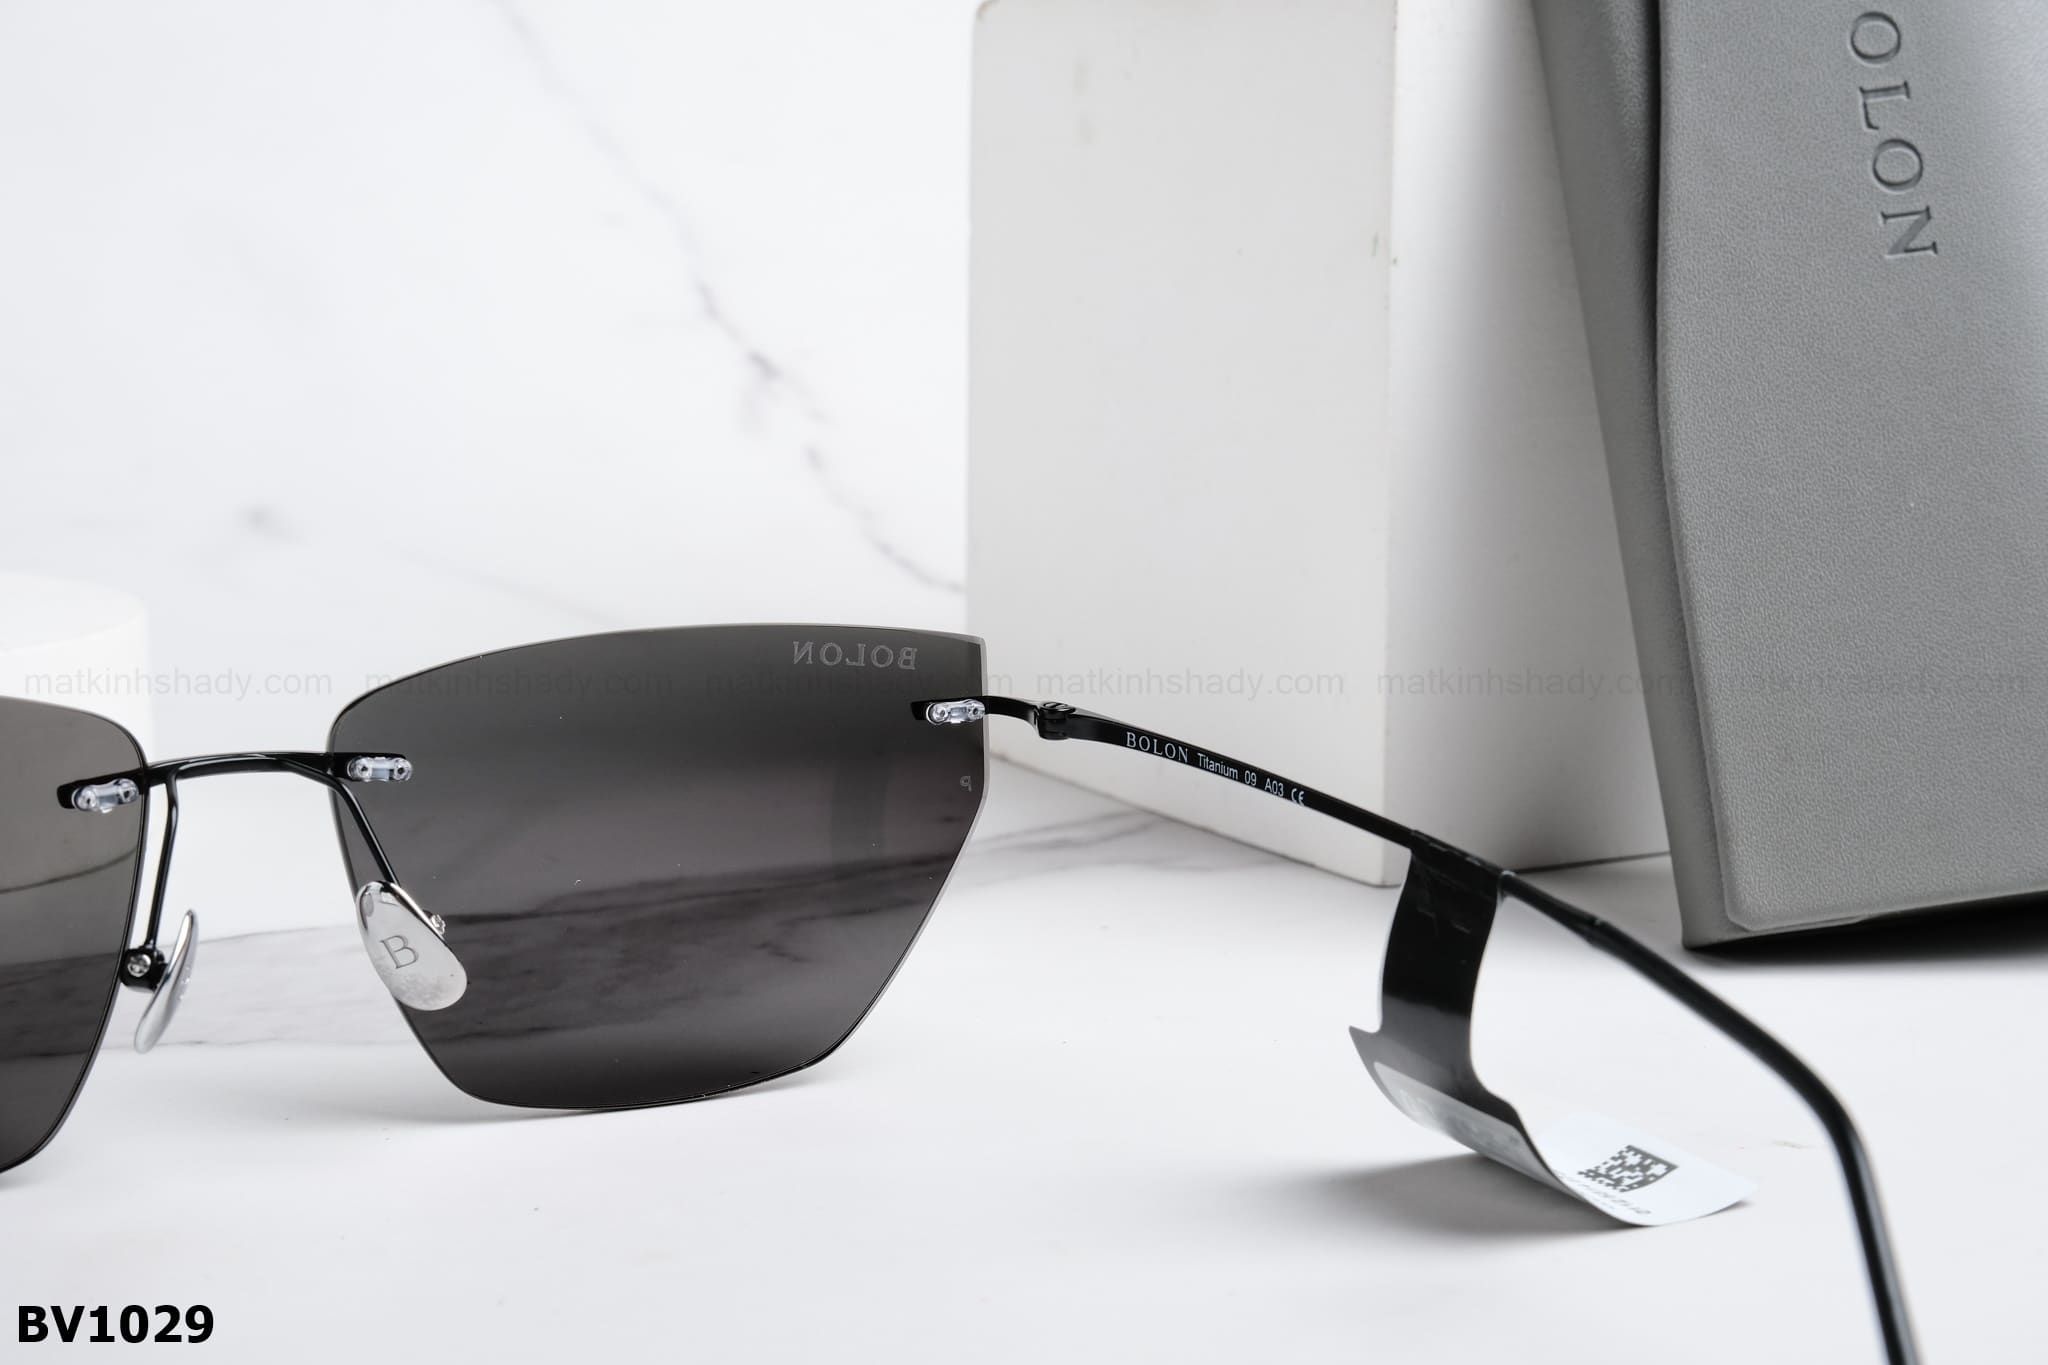  Bolon Eyewear - Sunglasses - BV1029 